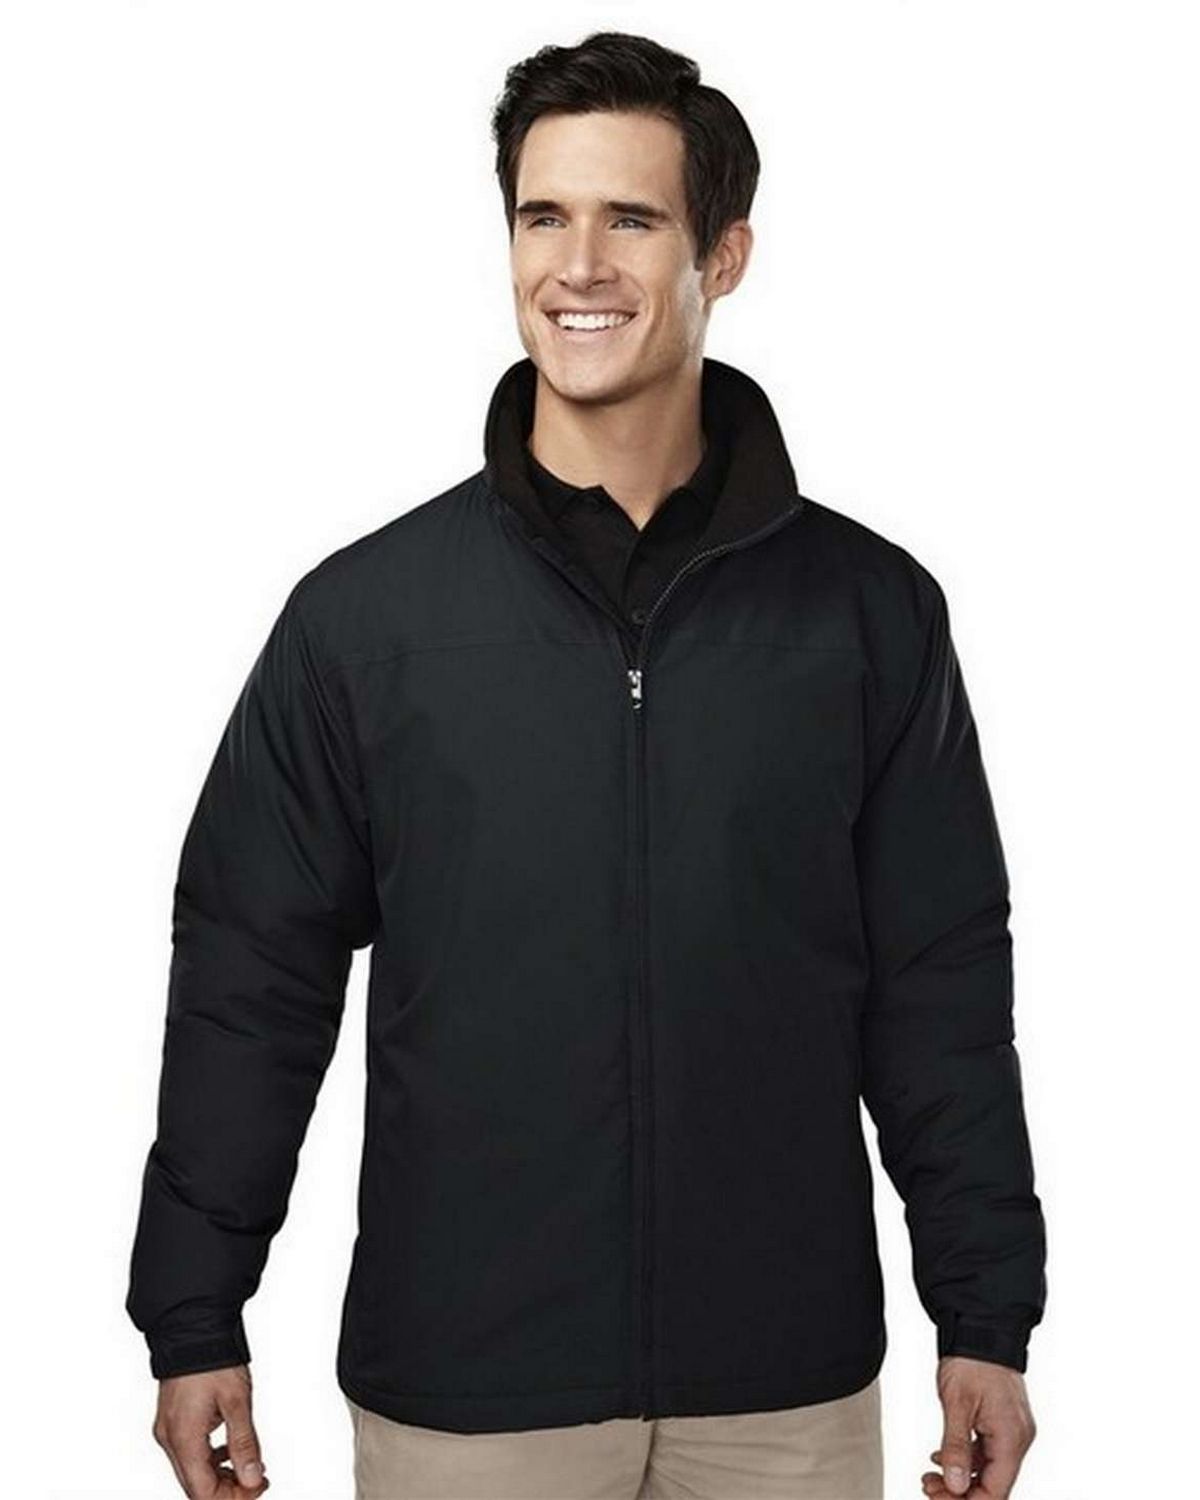 Tri-Mountain 8880 Saga Men Long Sleeve Jacket with Water Resistant